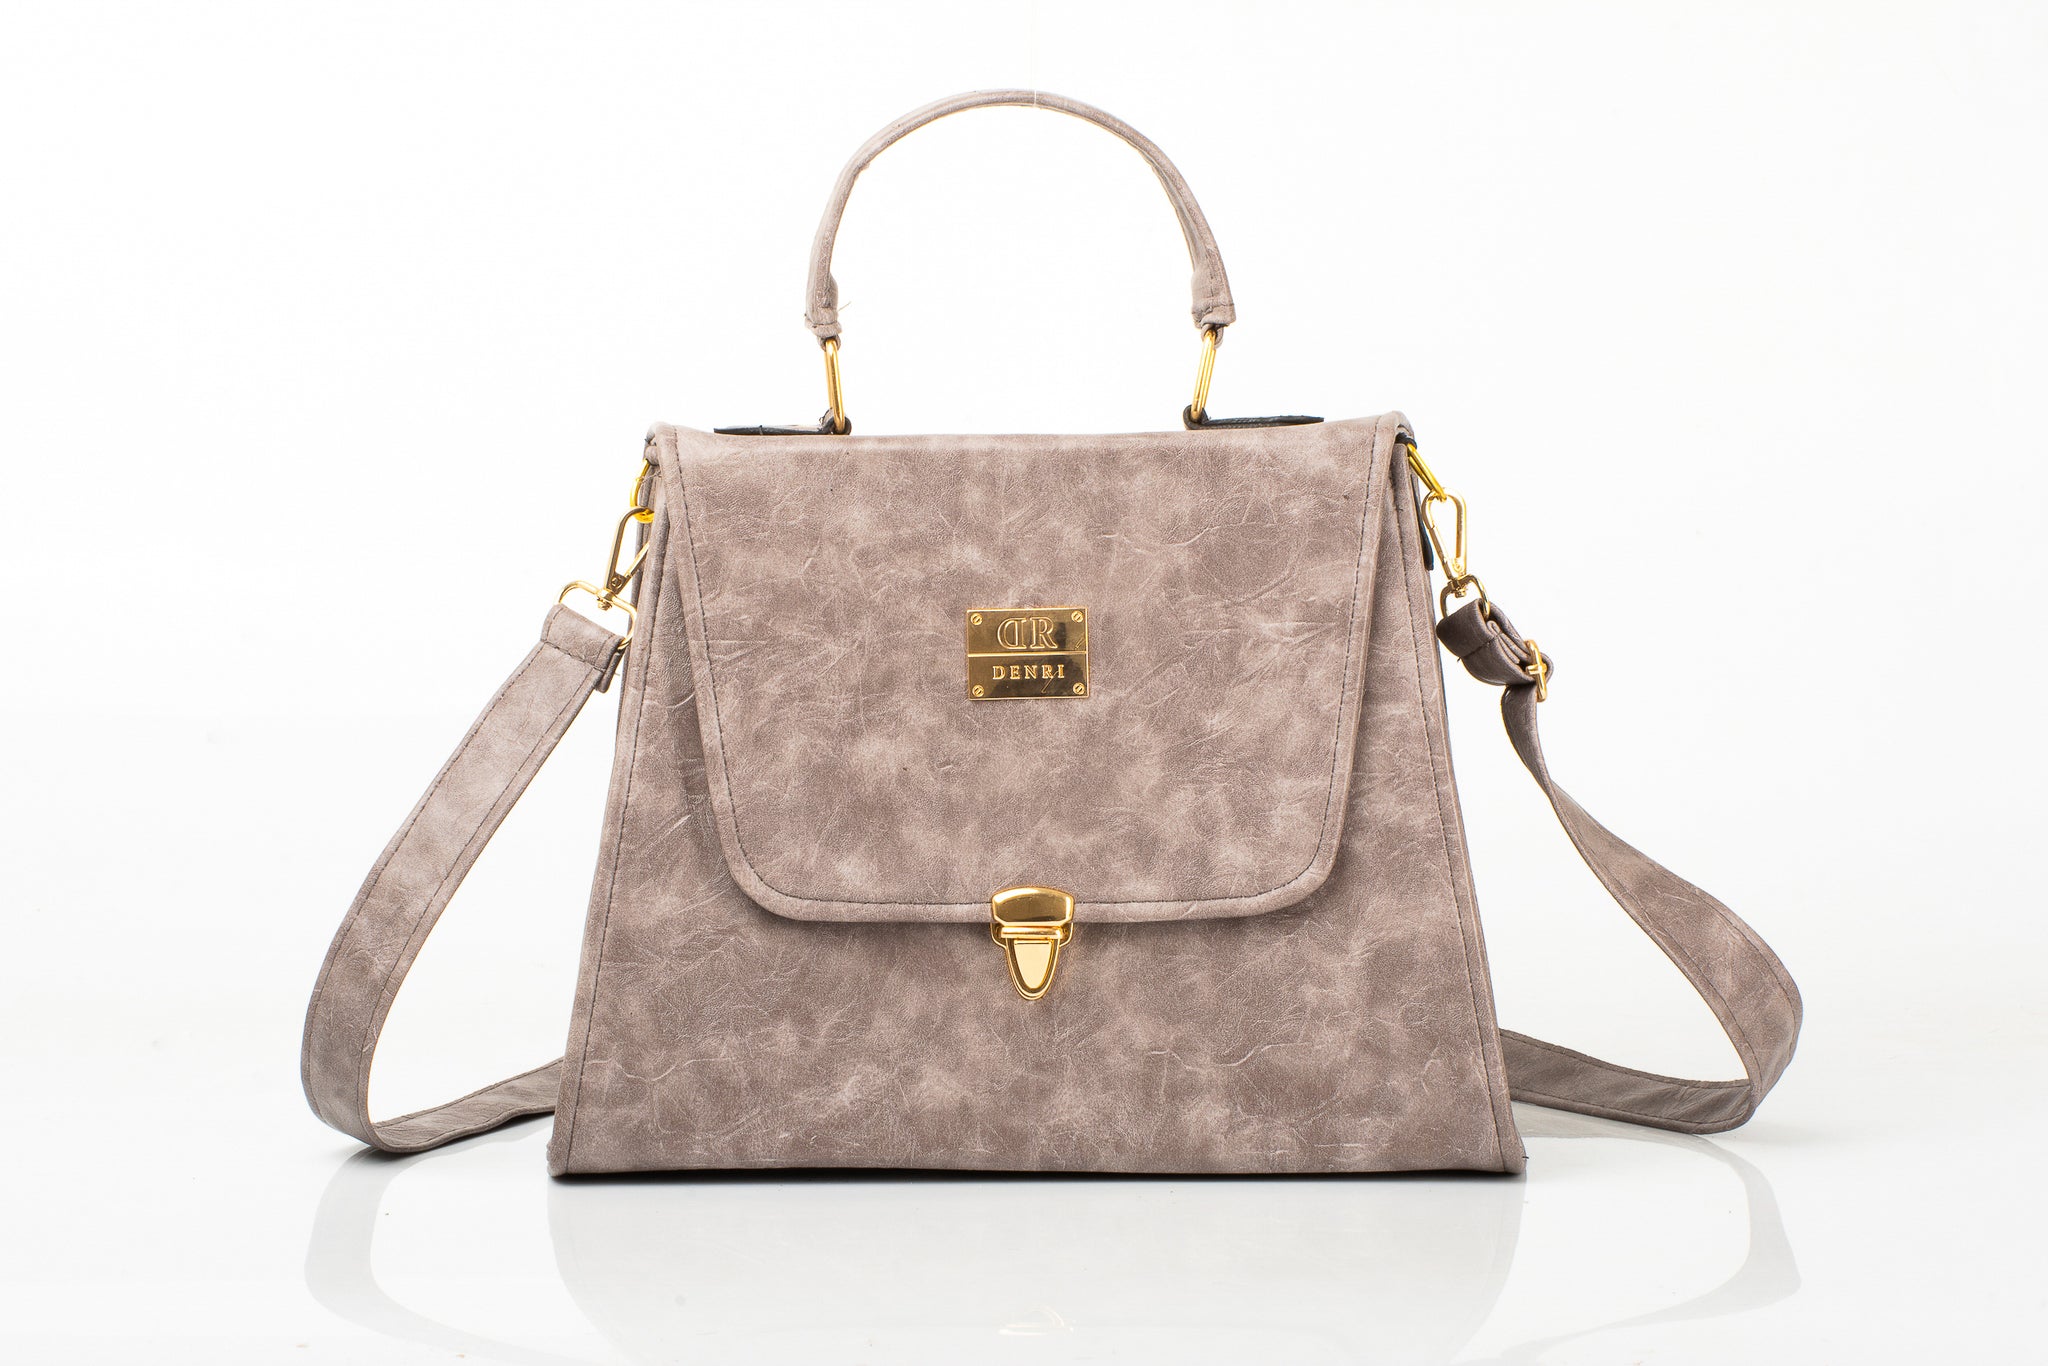 Women's Small Satchel Crossbody Bag – iLeatherhandbag